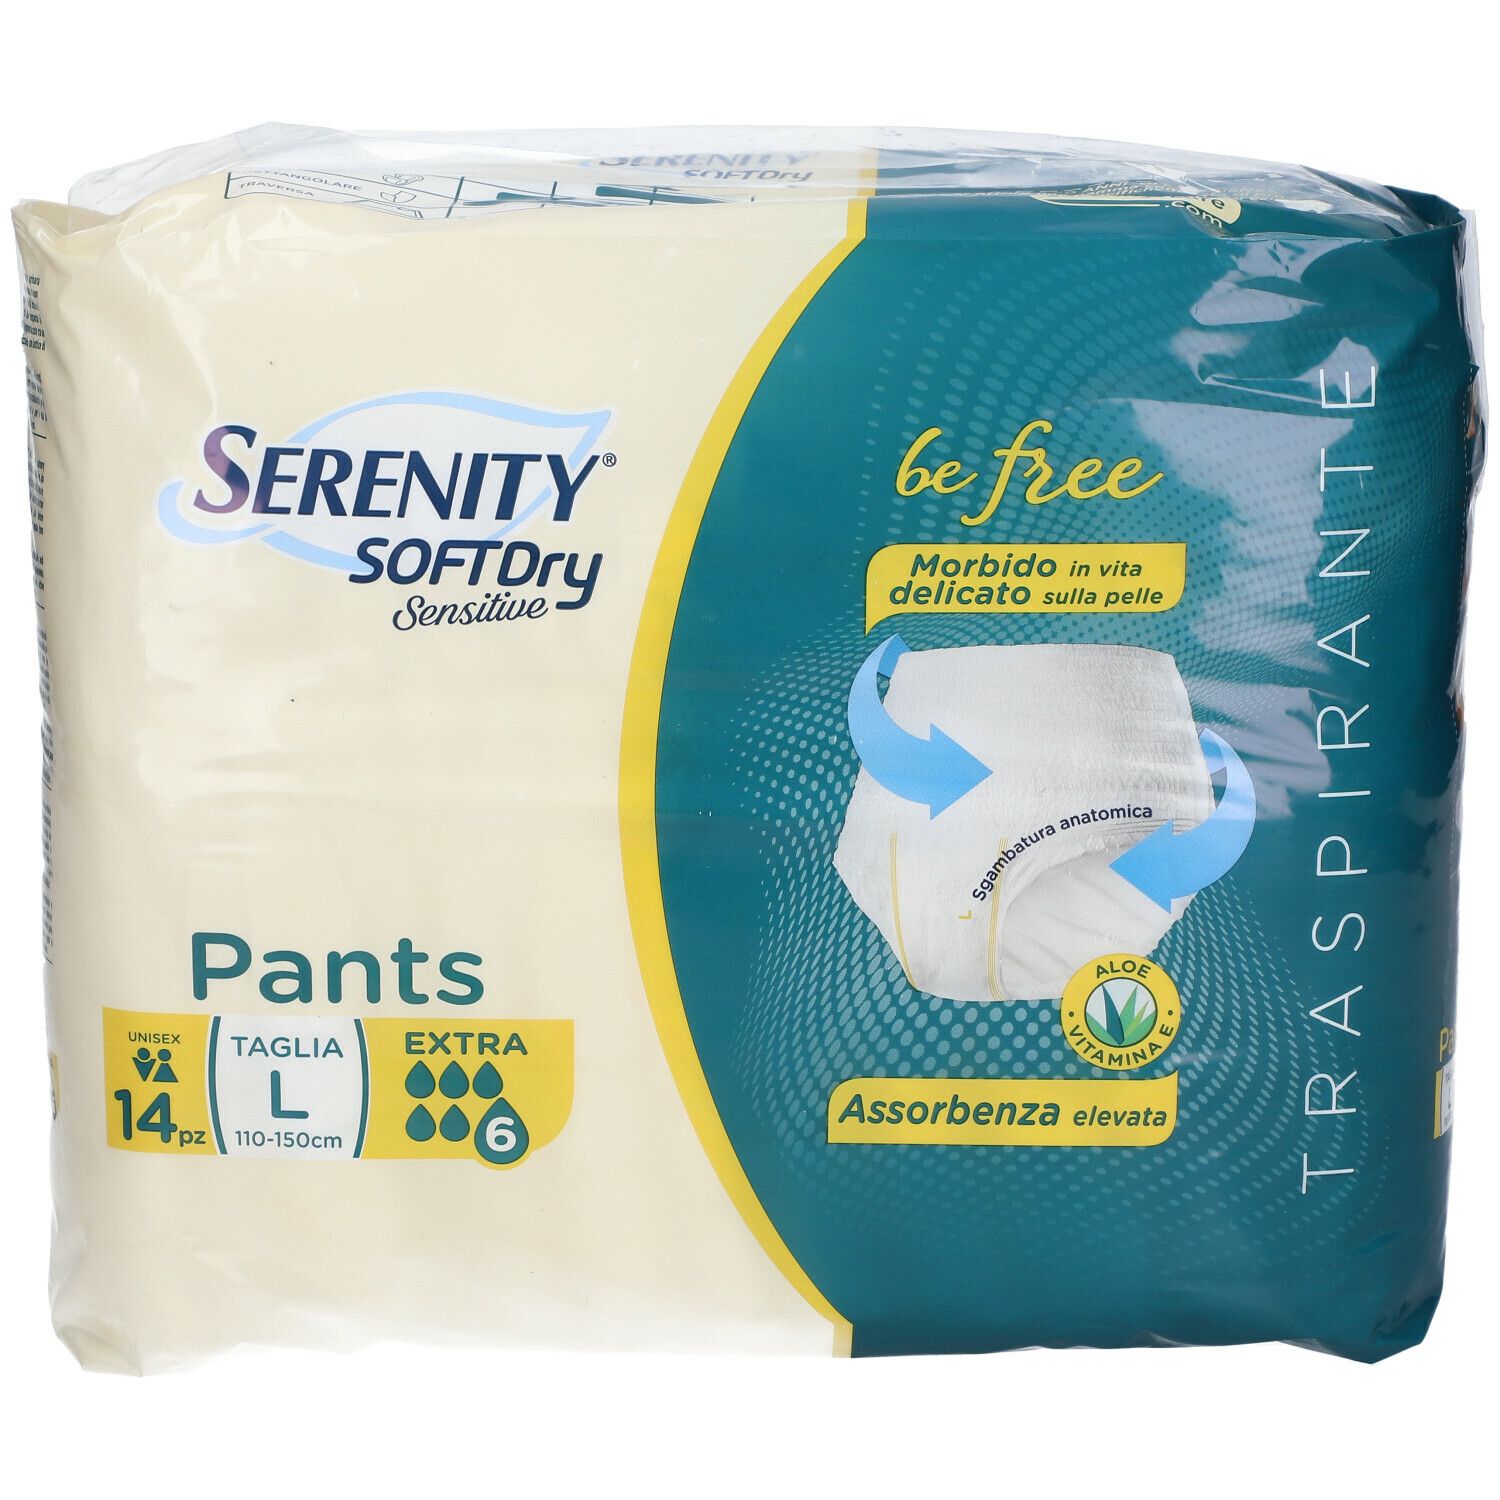 Serenity SoftDry Sensitive Be Free Pants L